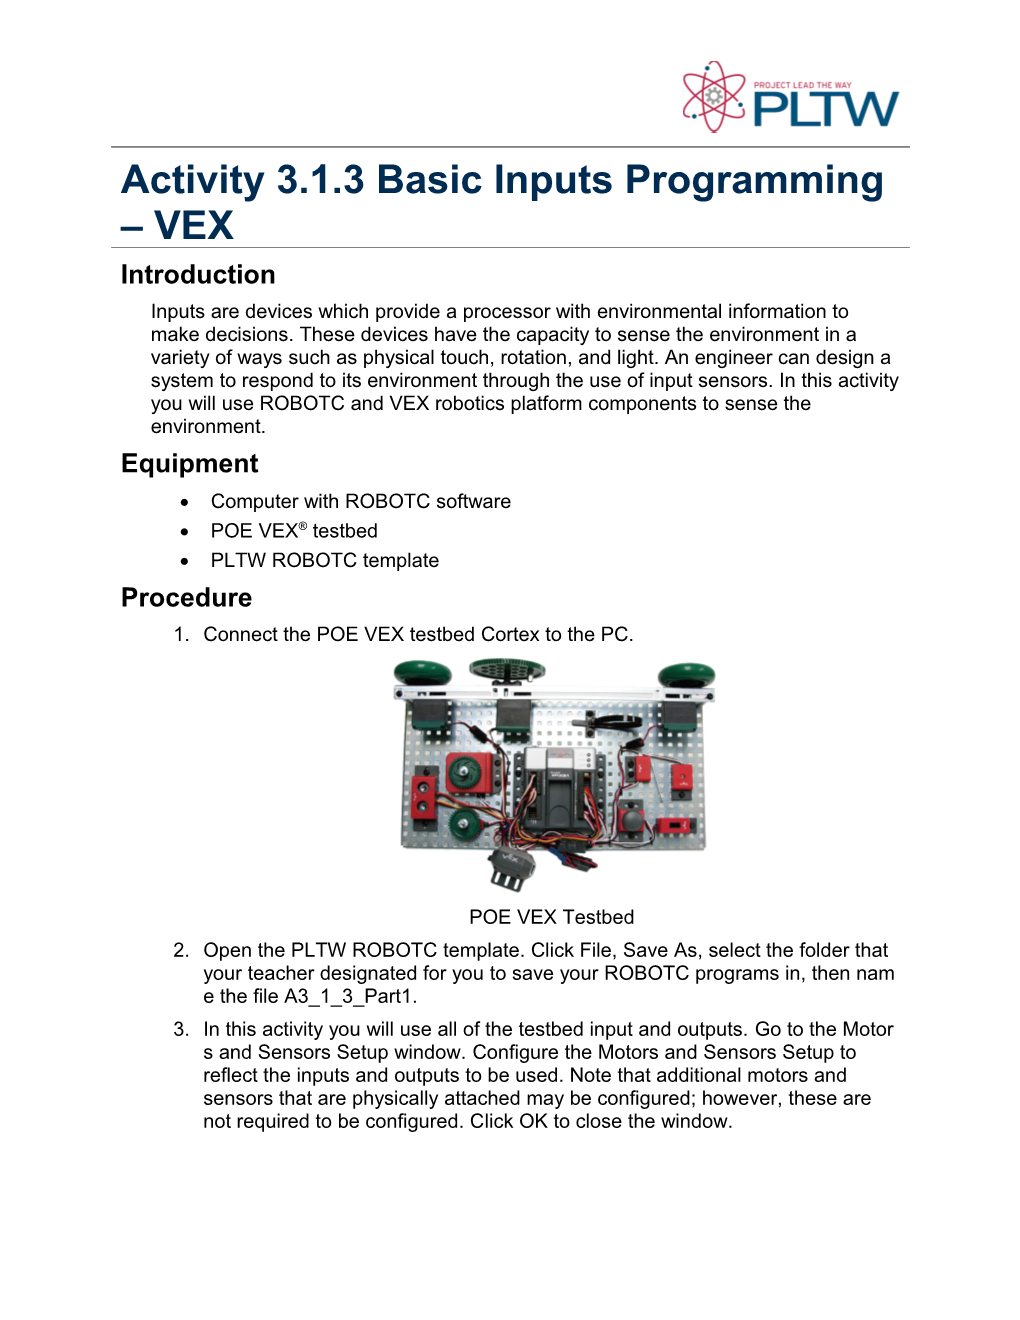 Activity 3.1.3 Basic Inputs Programming VEX